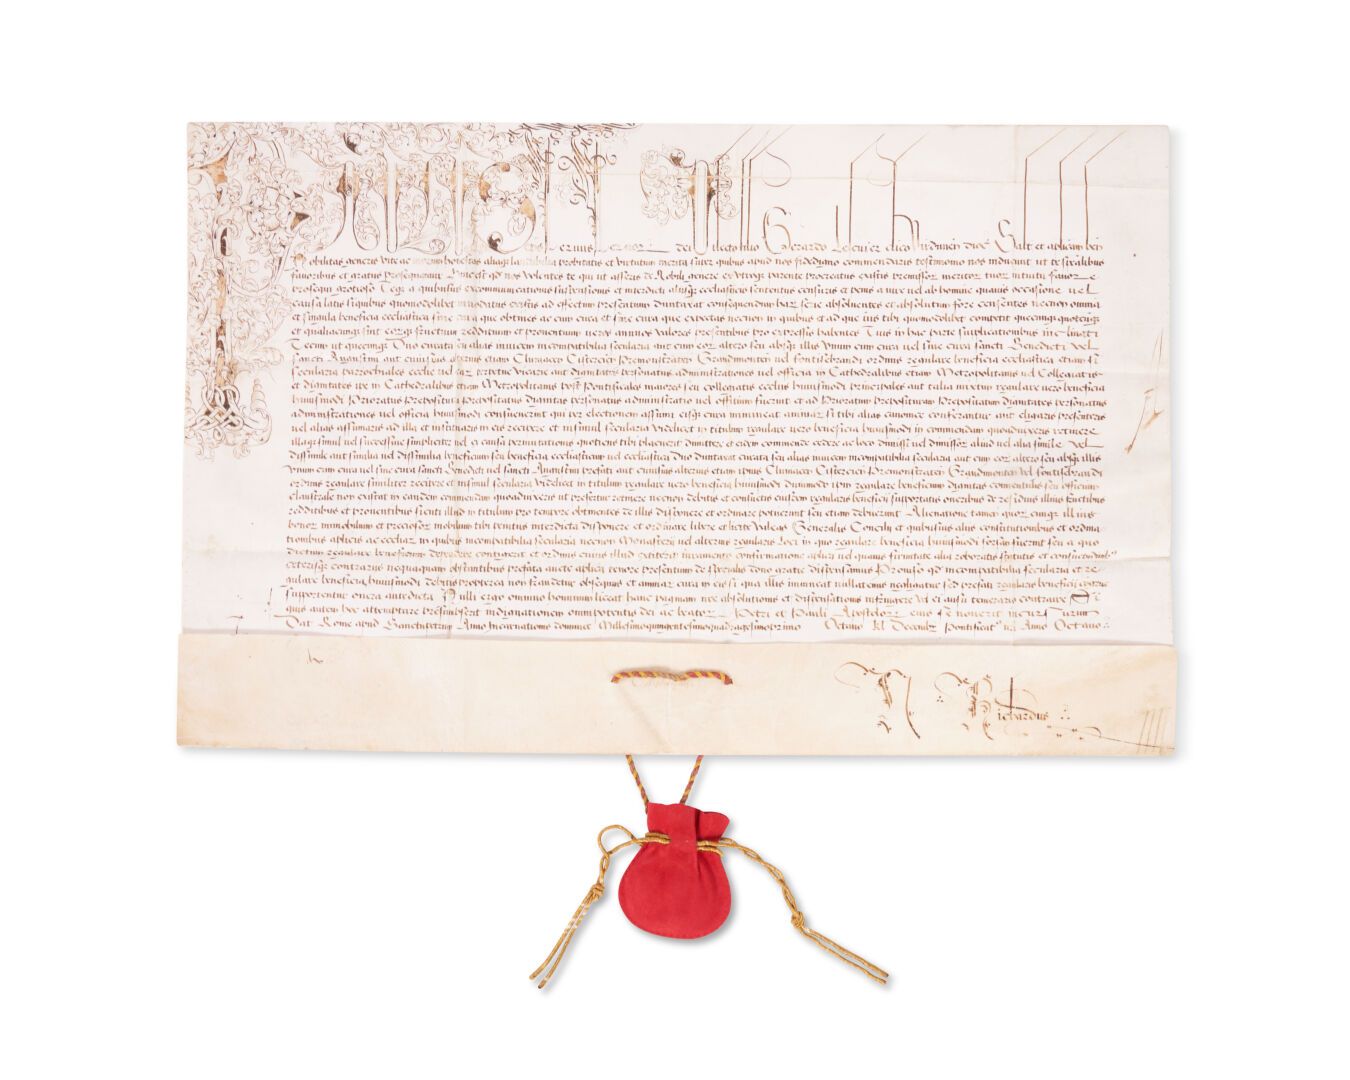 Null 赦免书
亚历山大-法尔内塞-保罗三世（1468-1549）1534年10月13日至1549年11月10日任教皇。
1541年12月以保罗三世的名义发布&hellip;